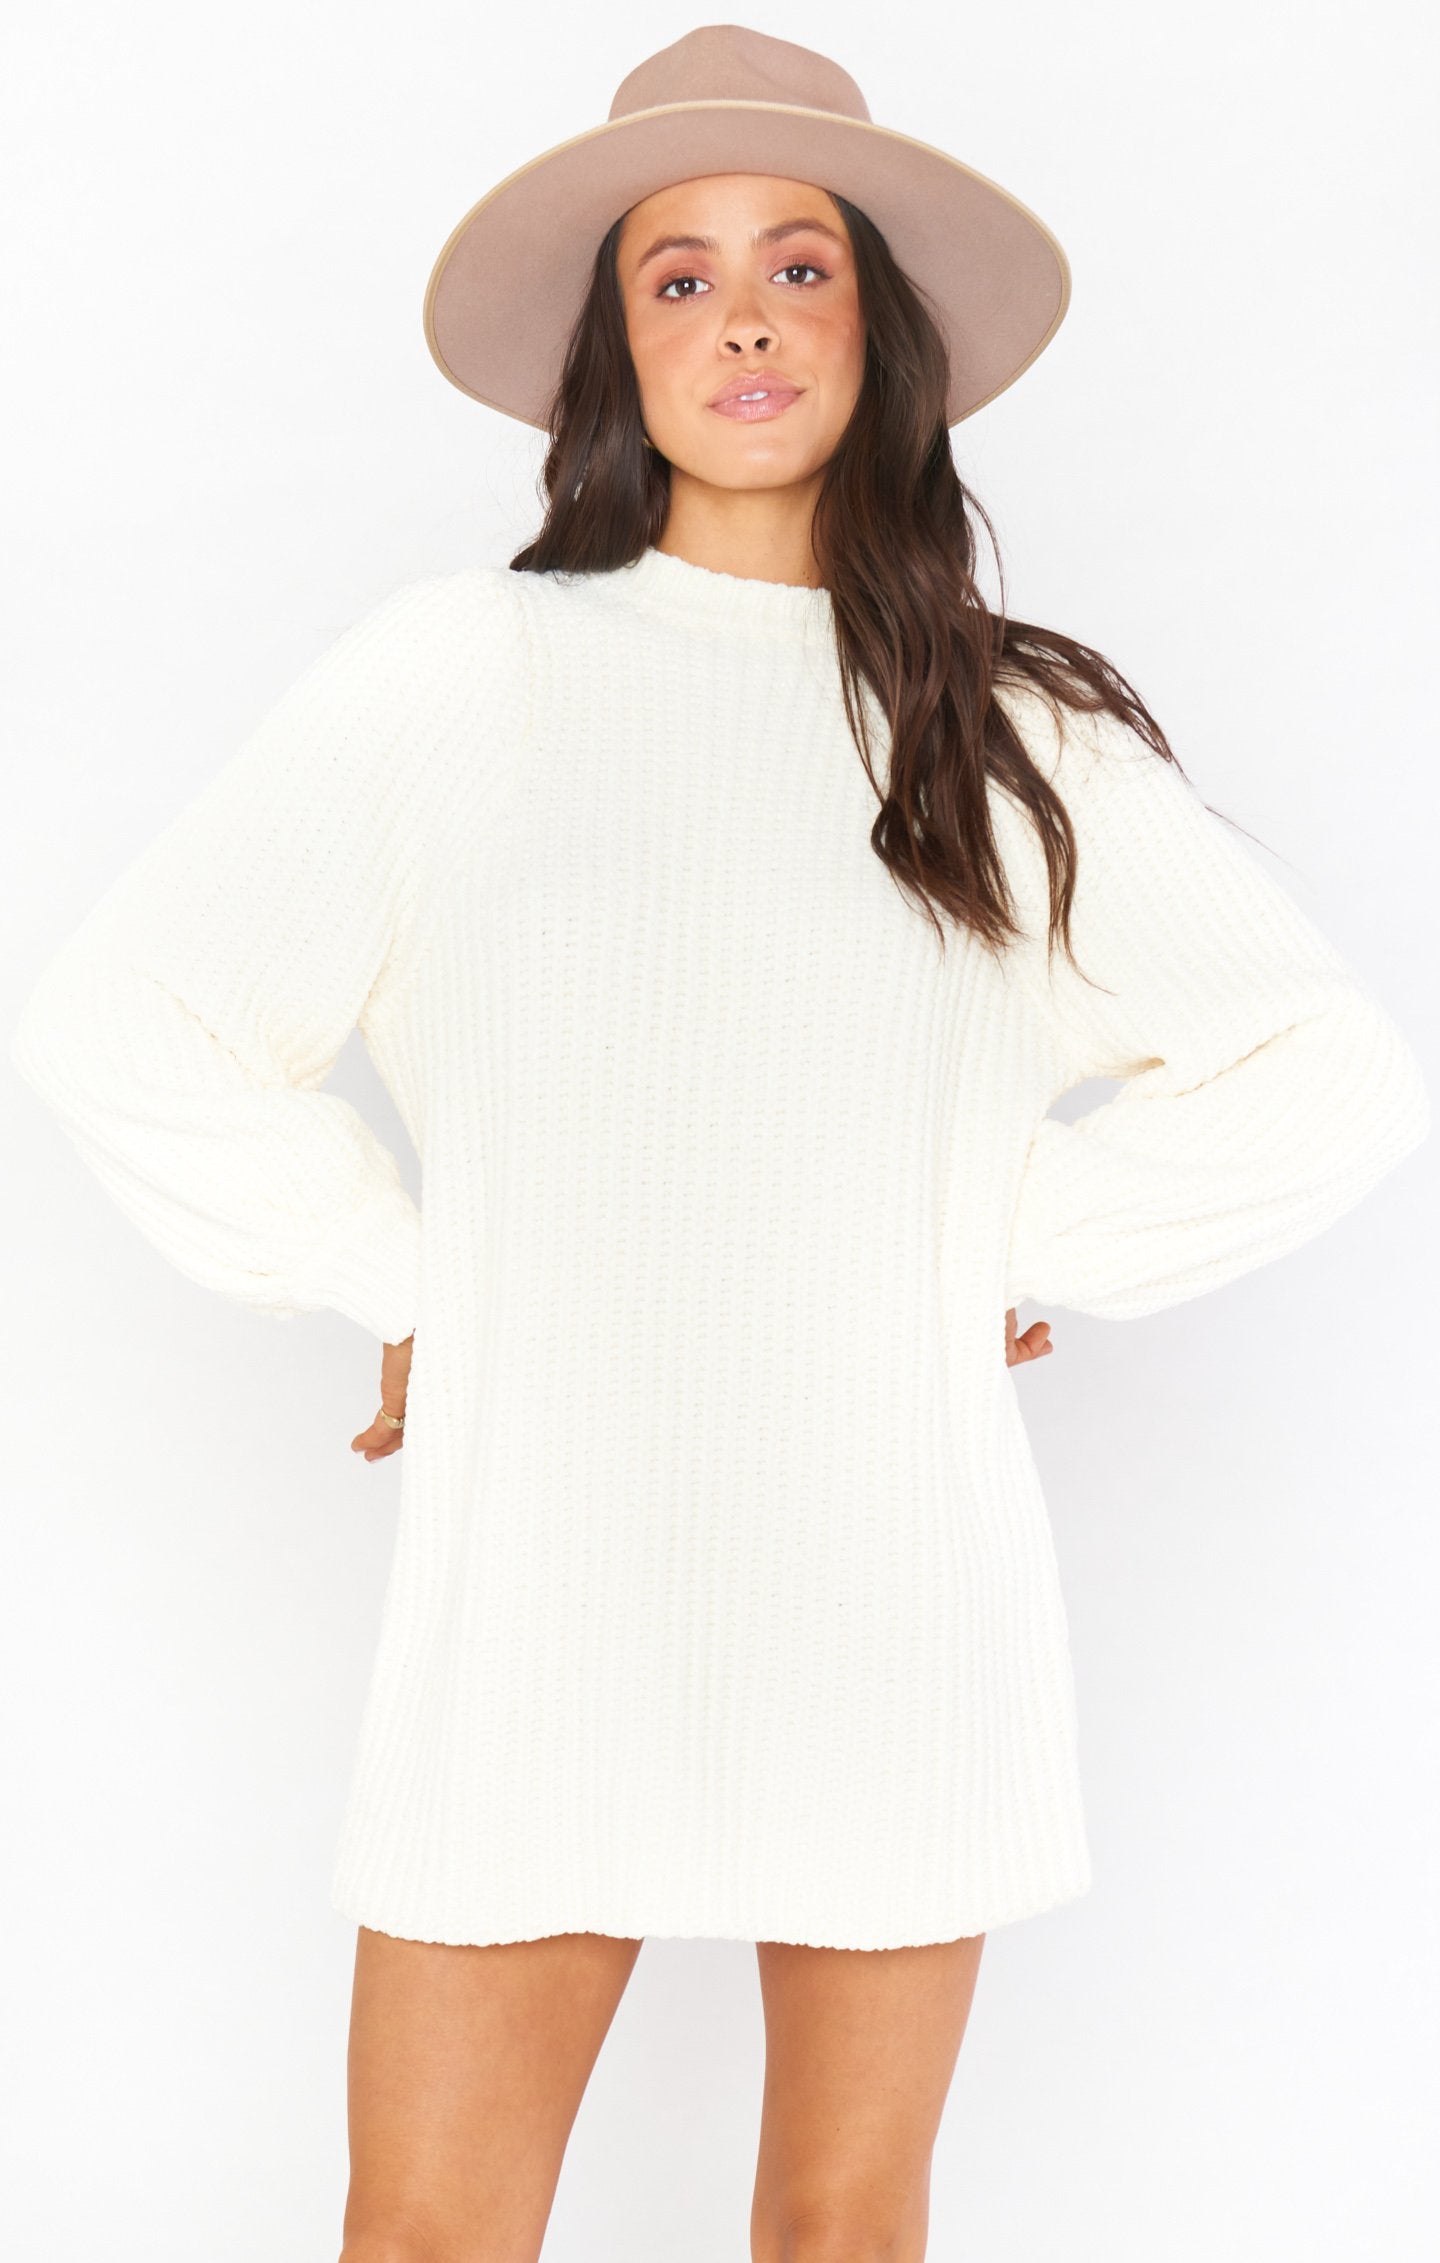 Dixon Sweater Dress